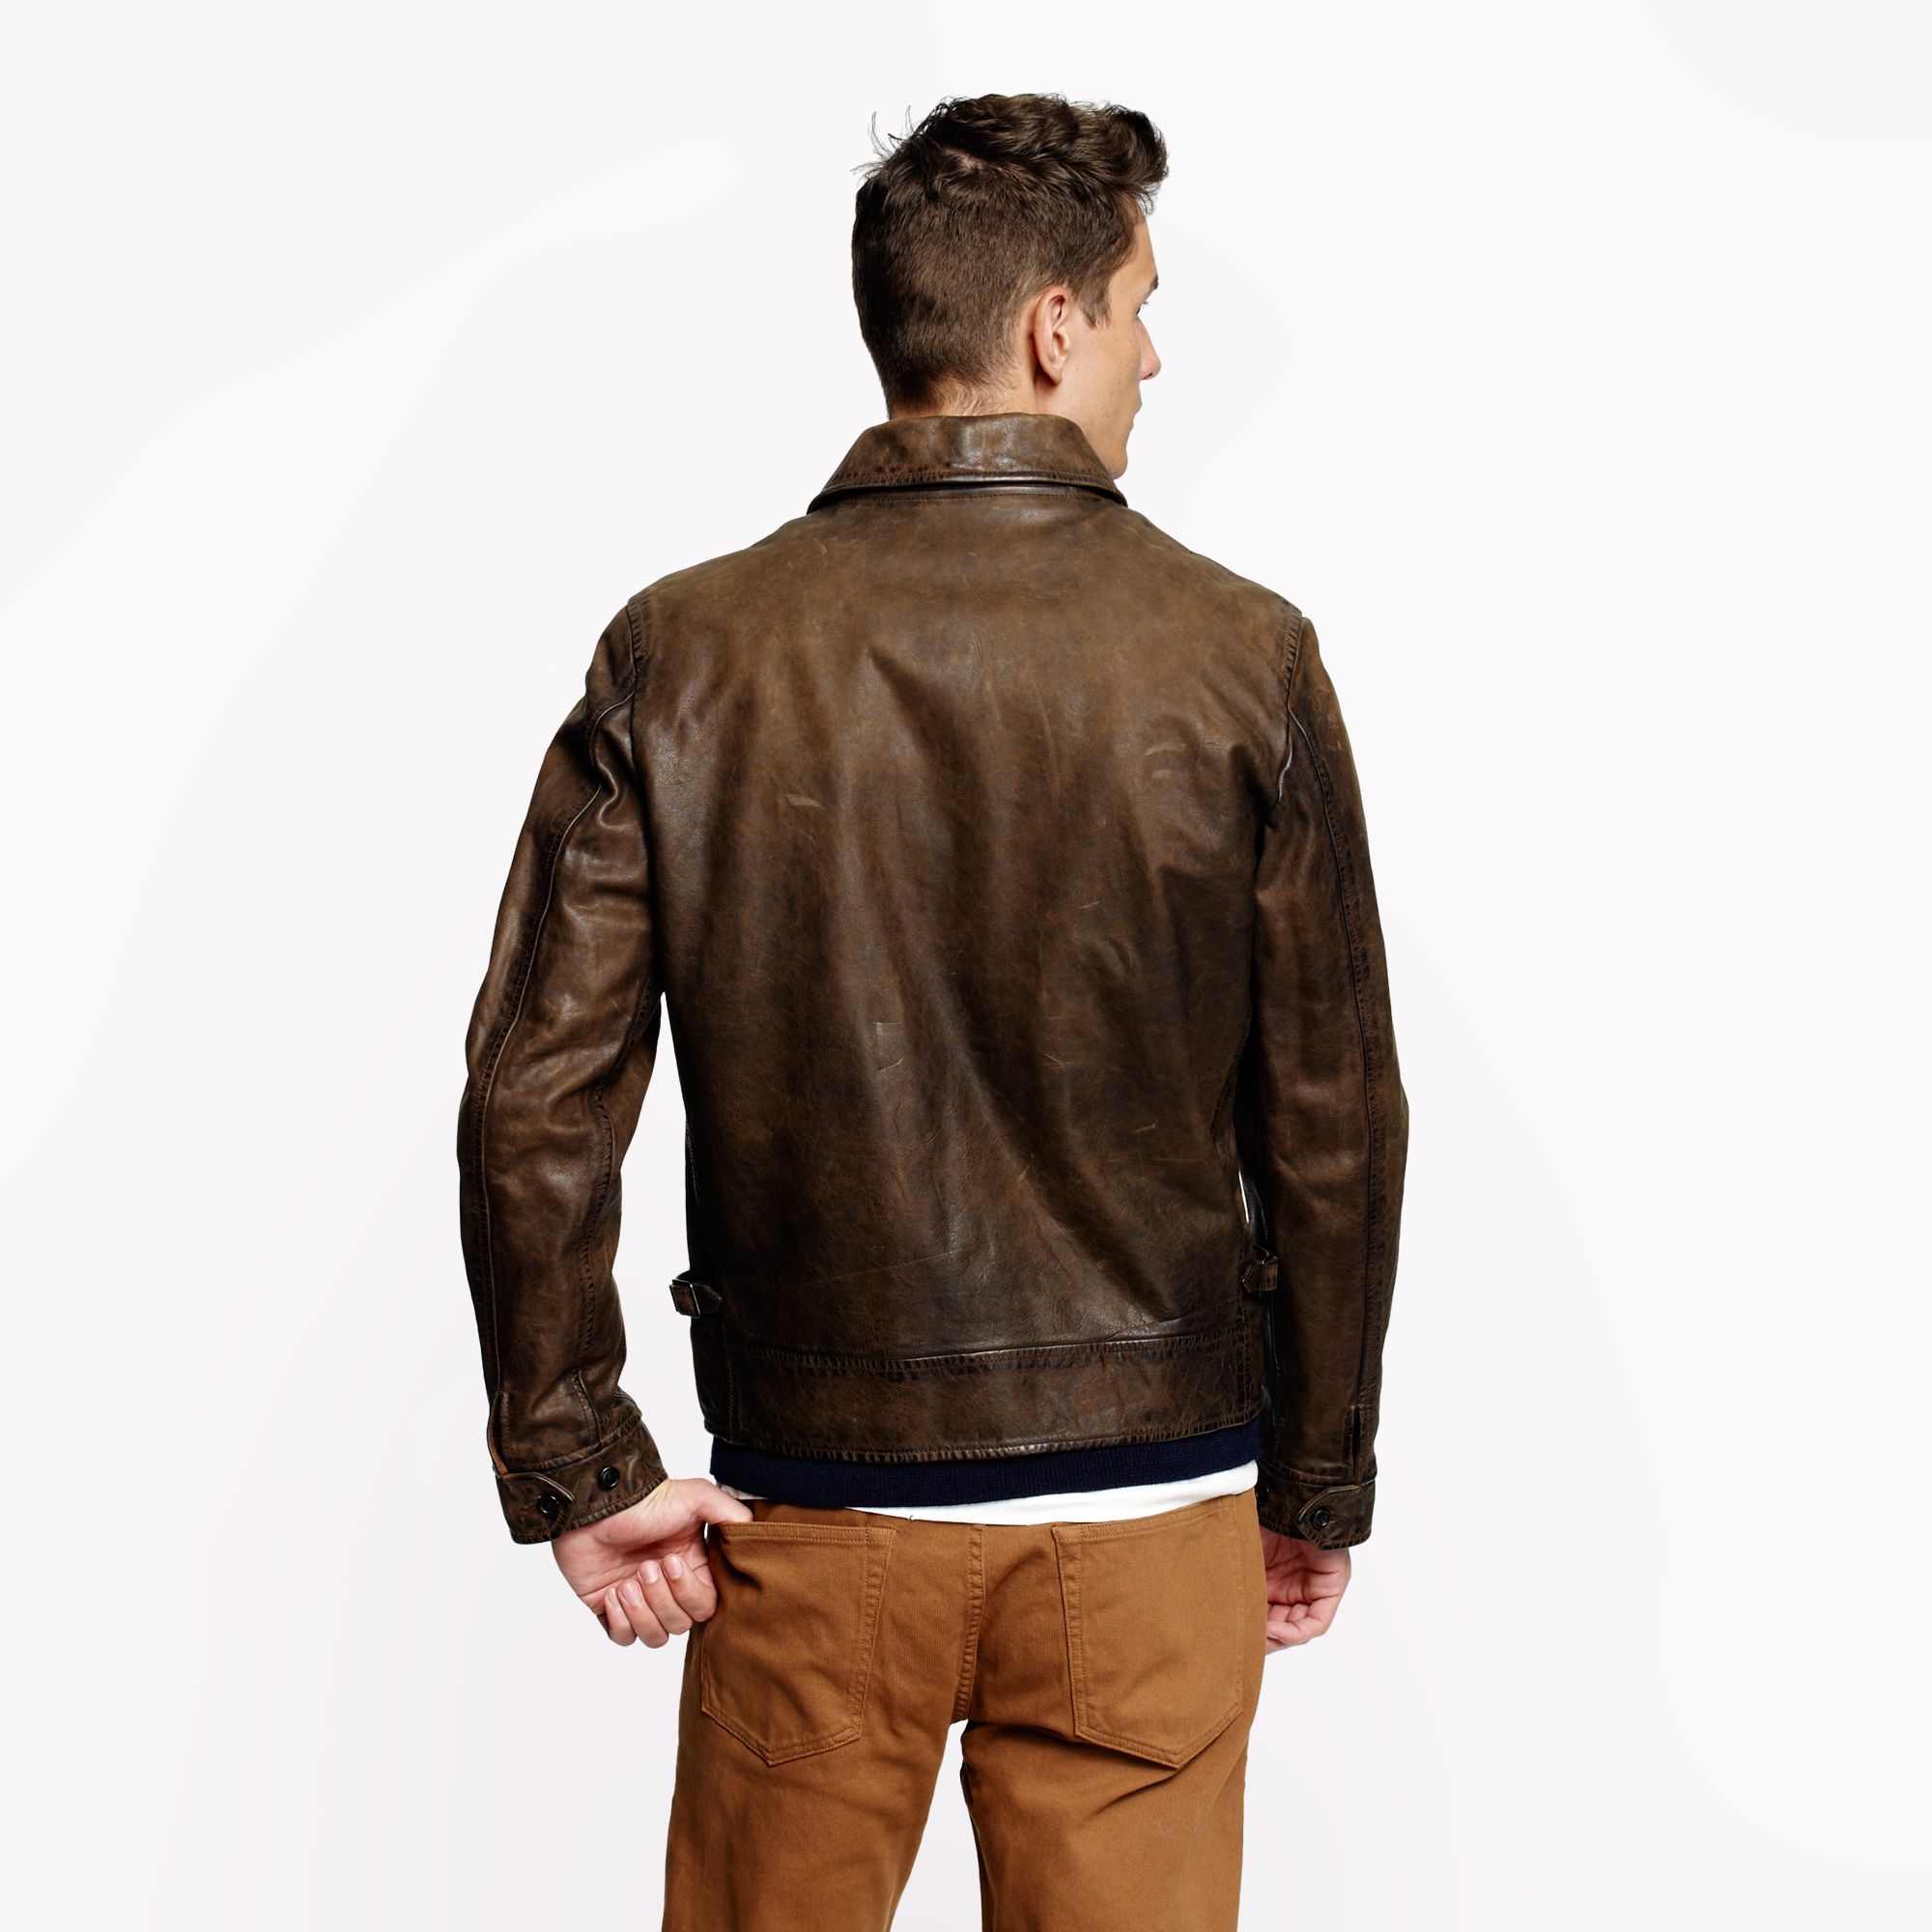 J.Crew Leather Garrett Jacket in Vintage Brown (Brown) for Men - Lyst